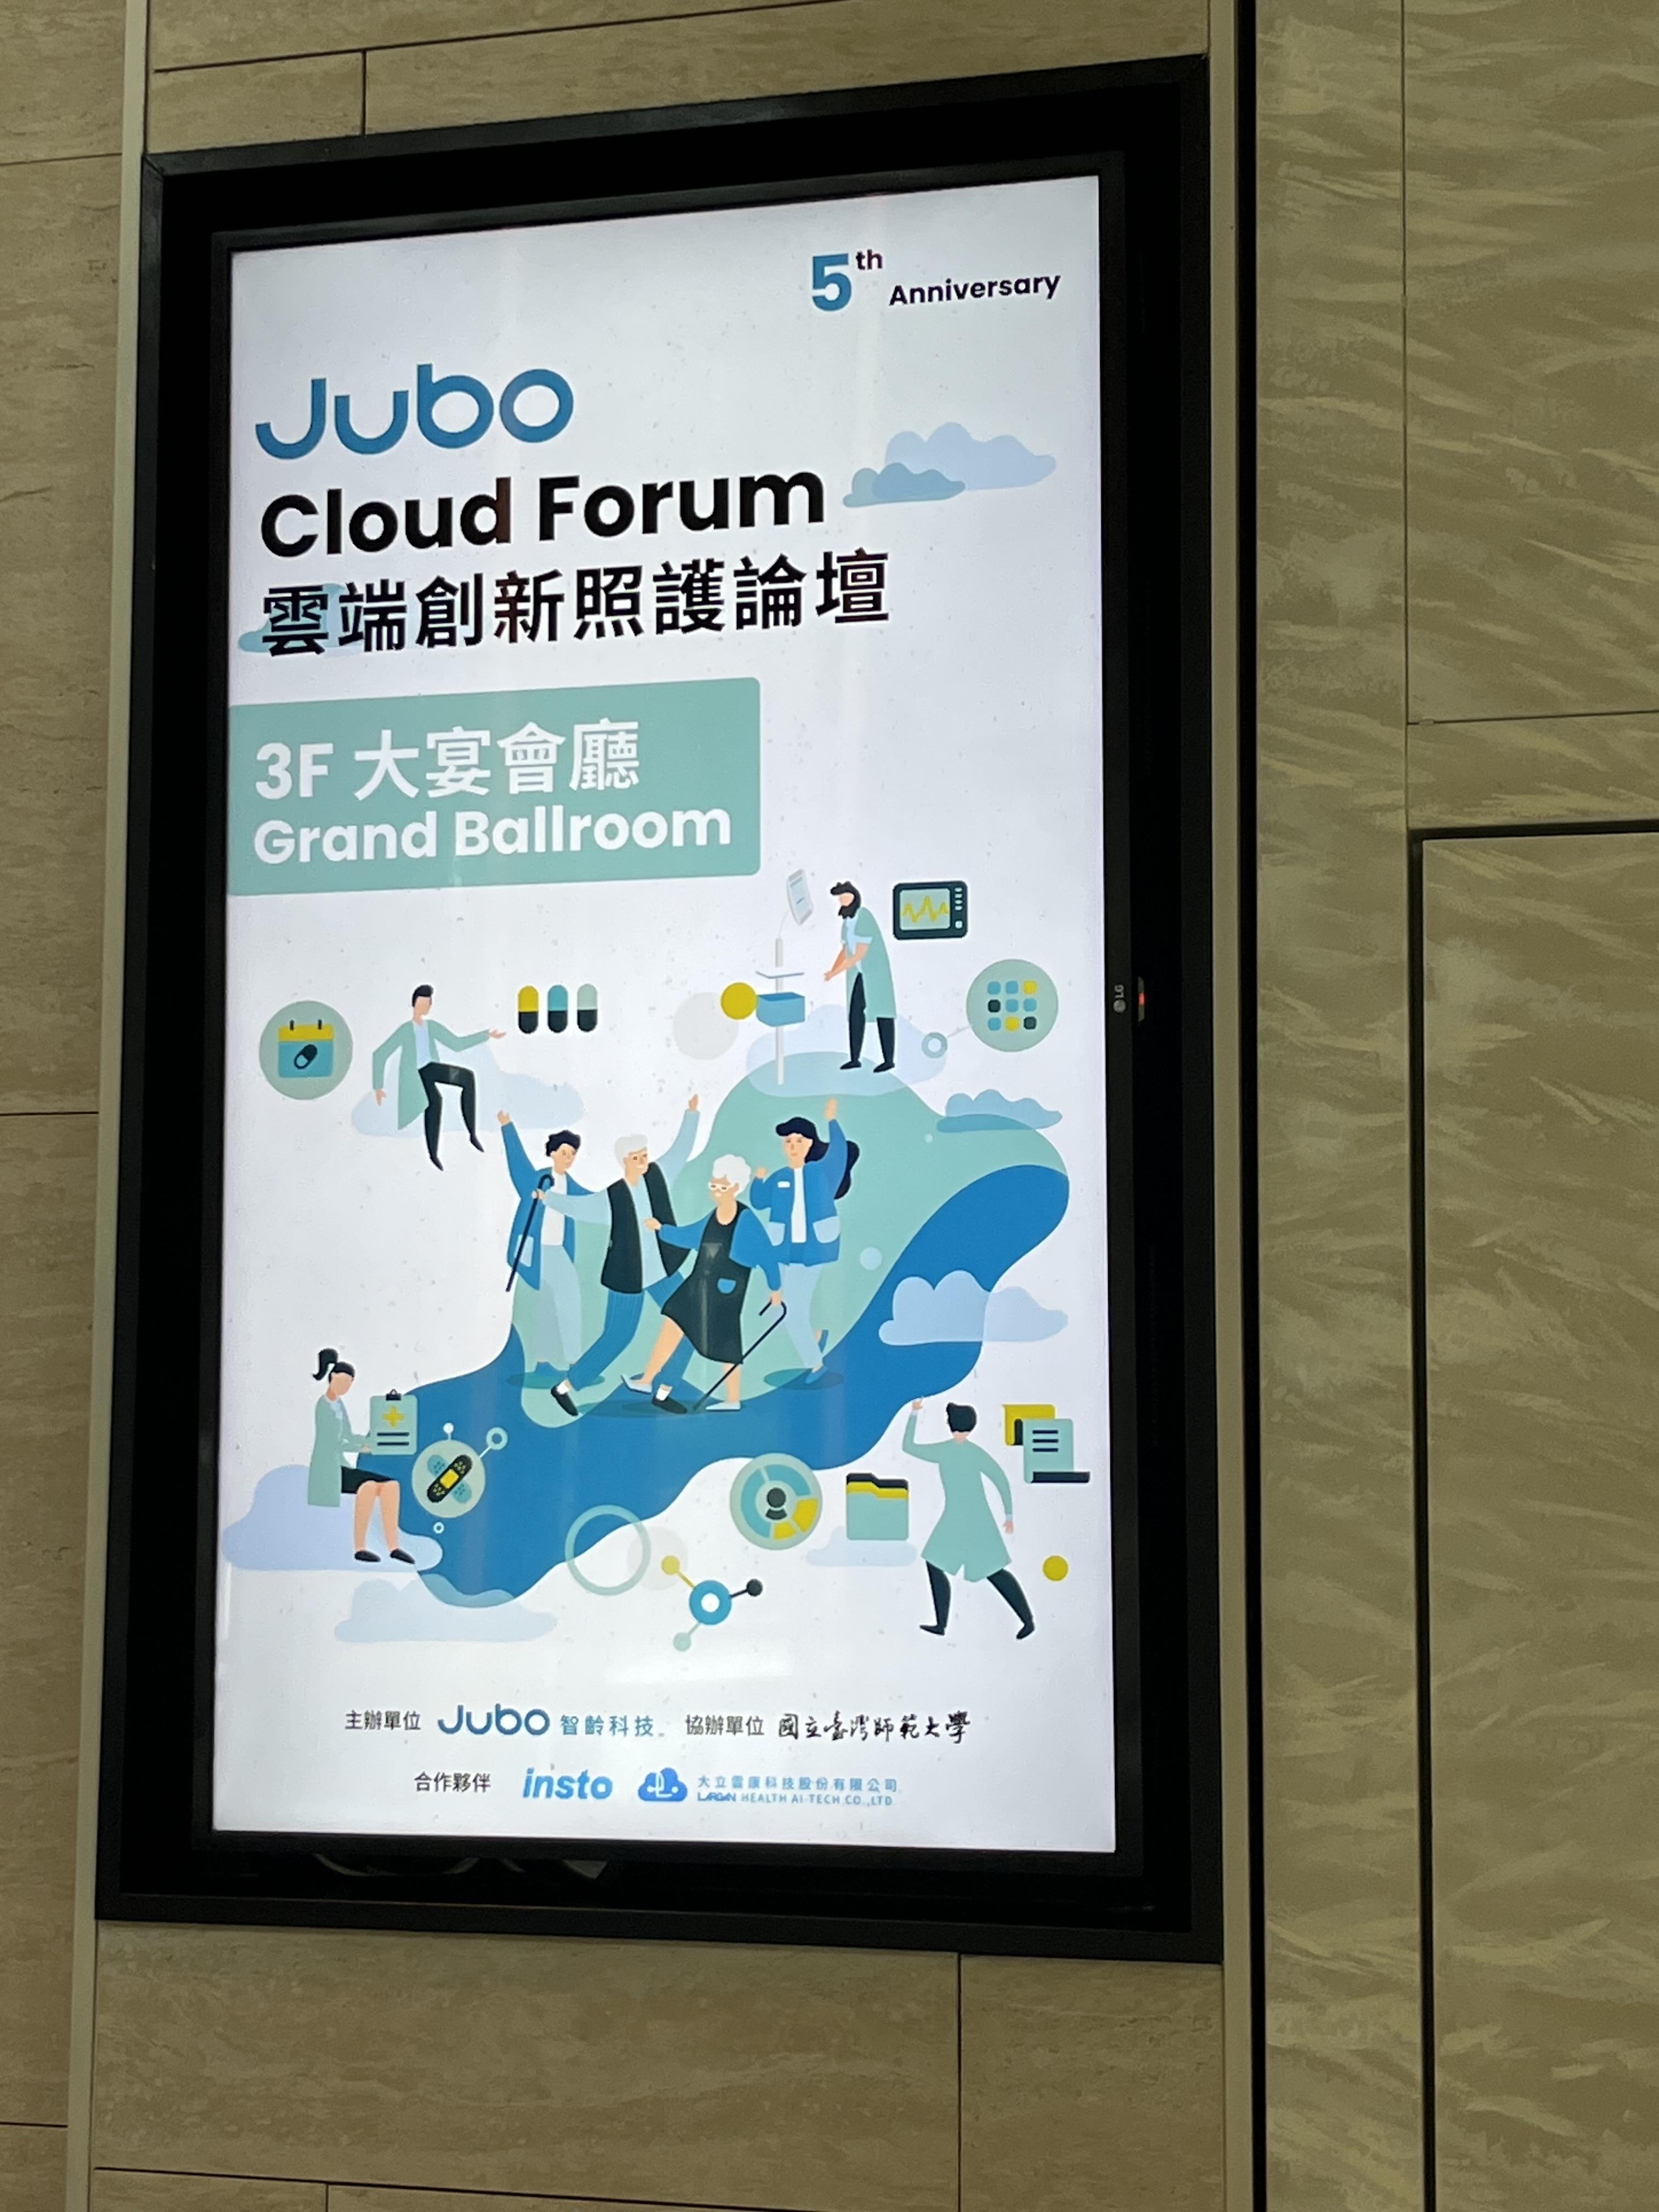 Jubo Cloud Forum-Partner Conference